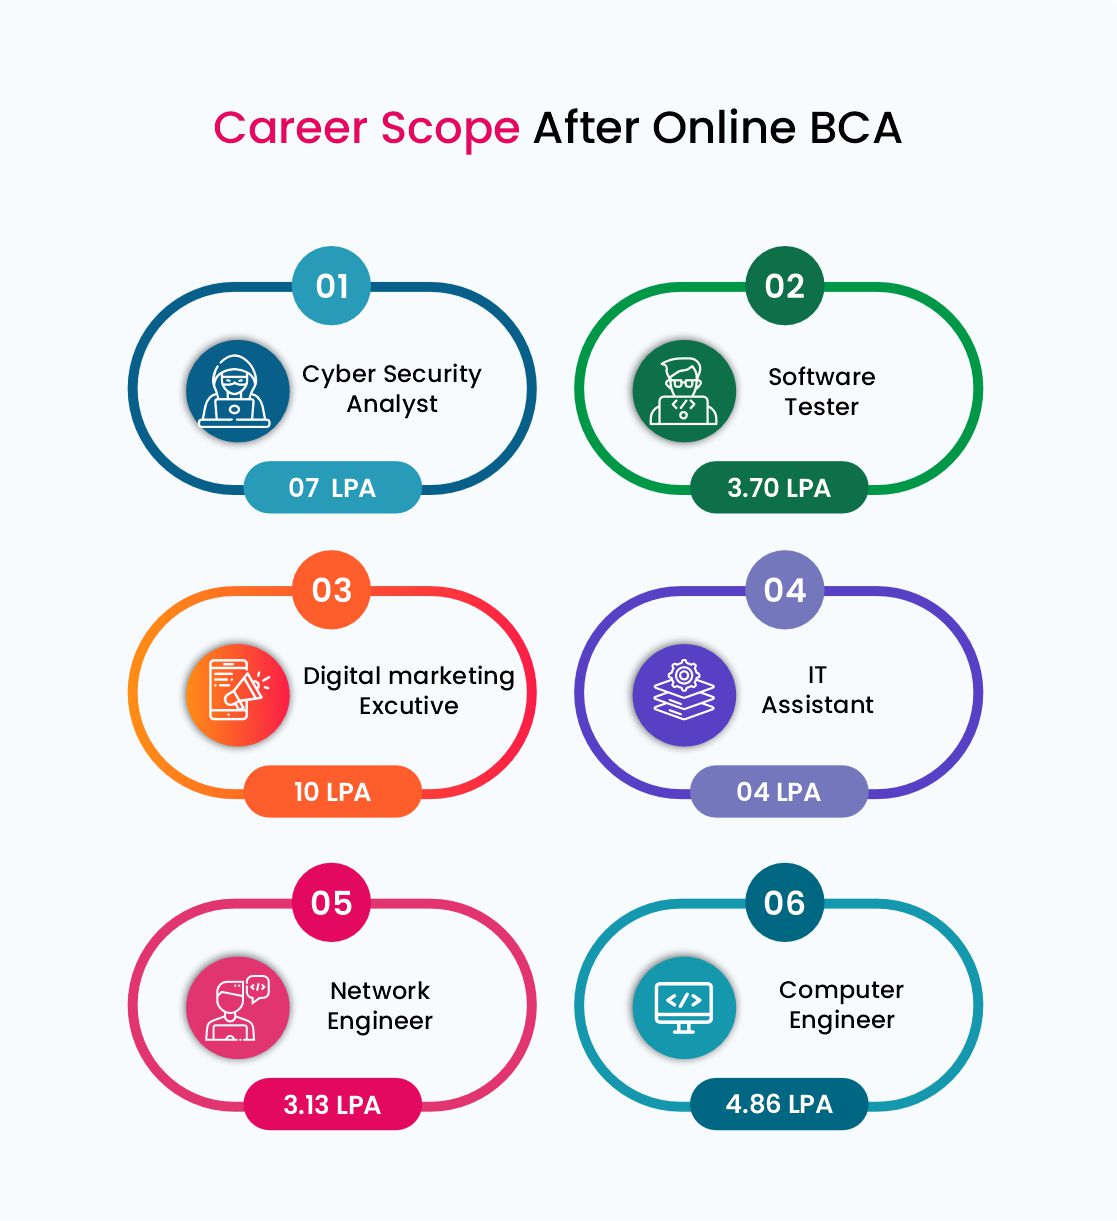 Online BCA career